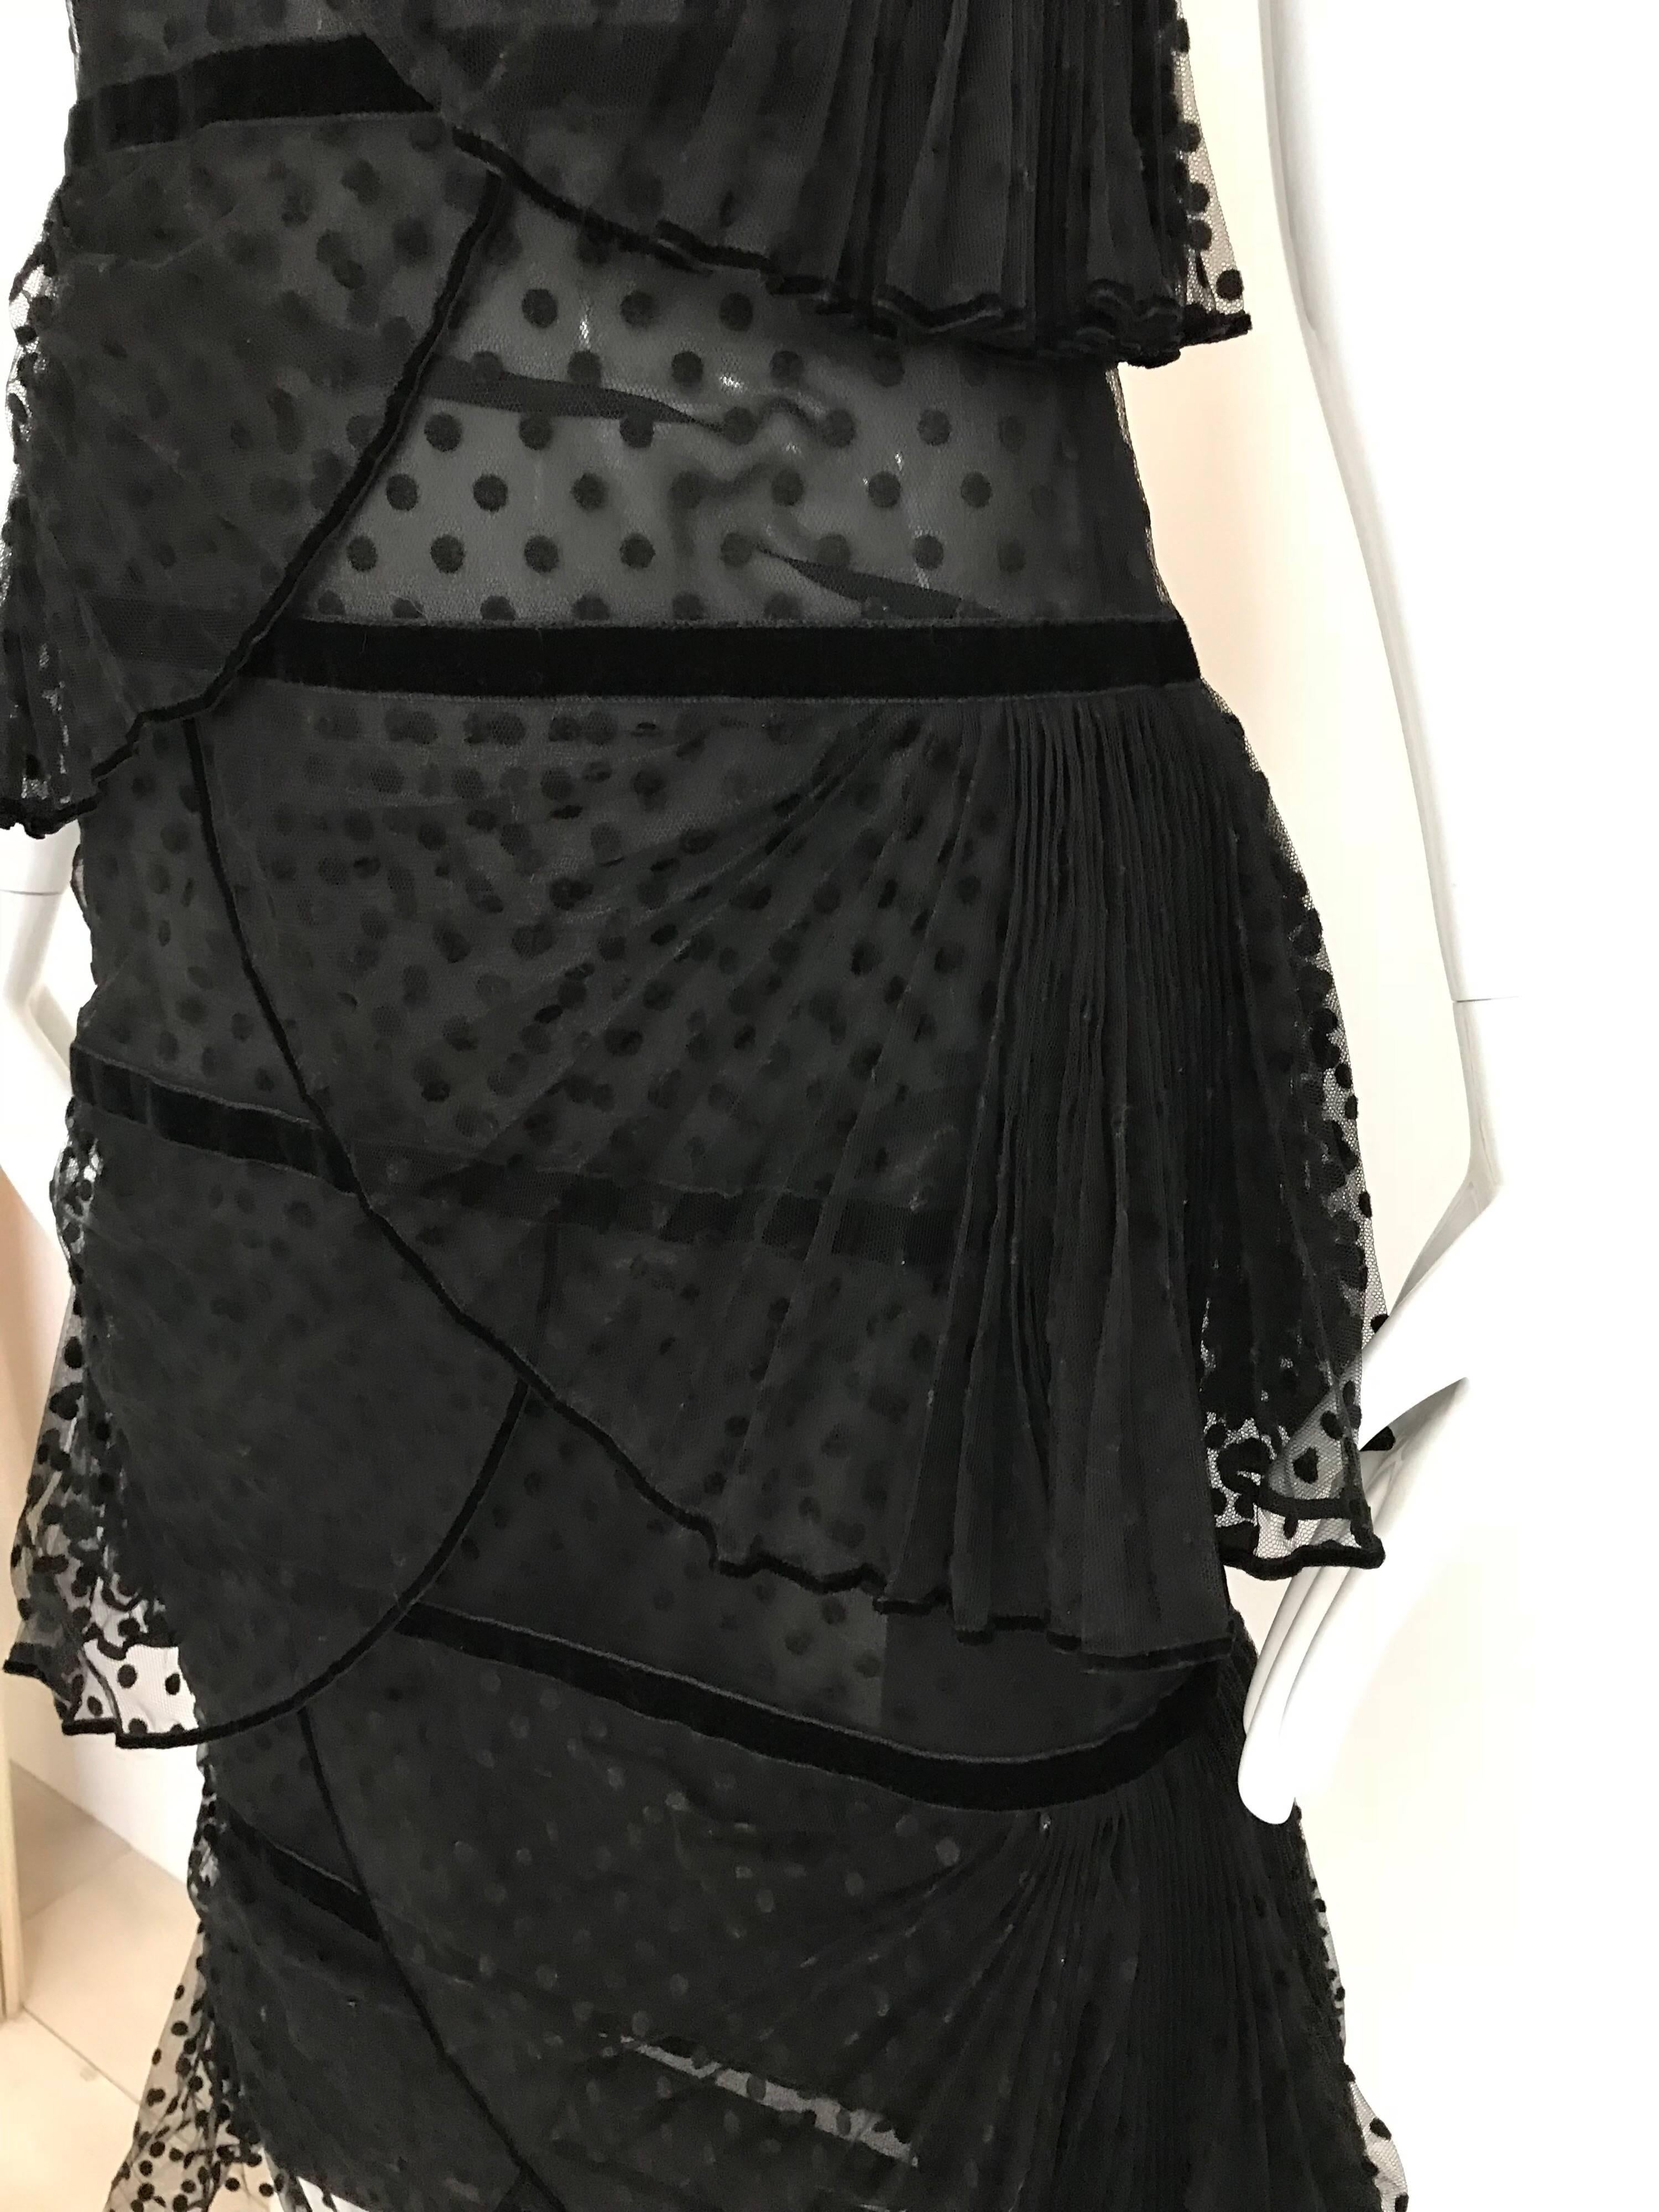  Christian Dior by Gianfranco Ferre Black Lace Strapless Velvet flocked Gown   2